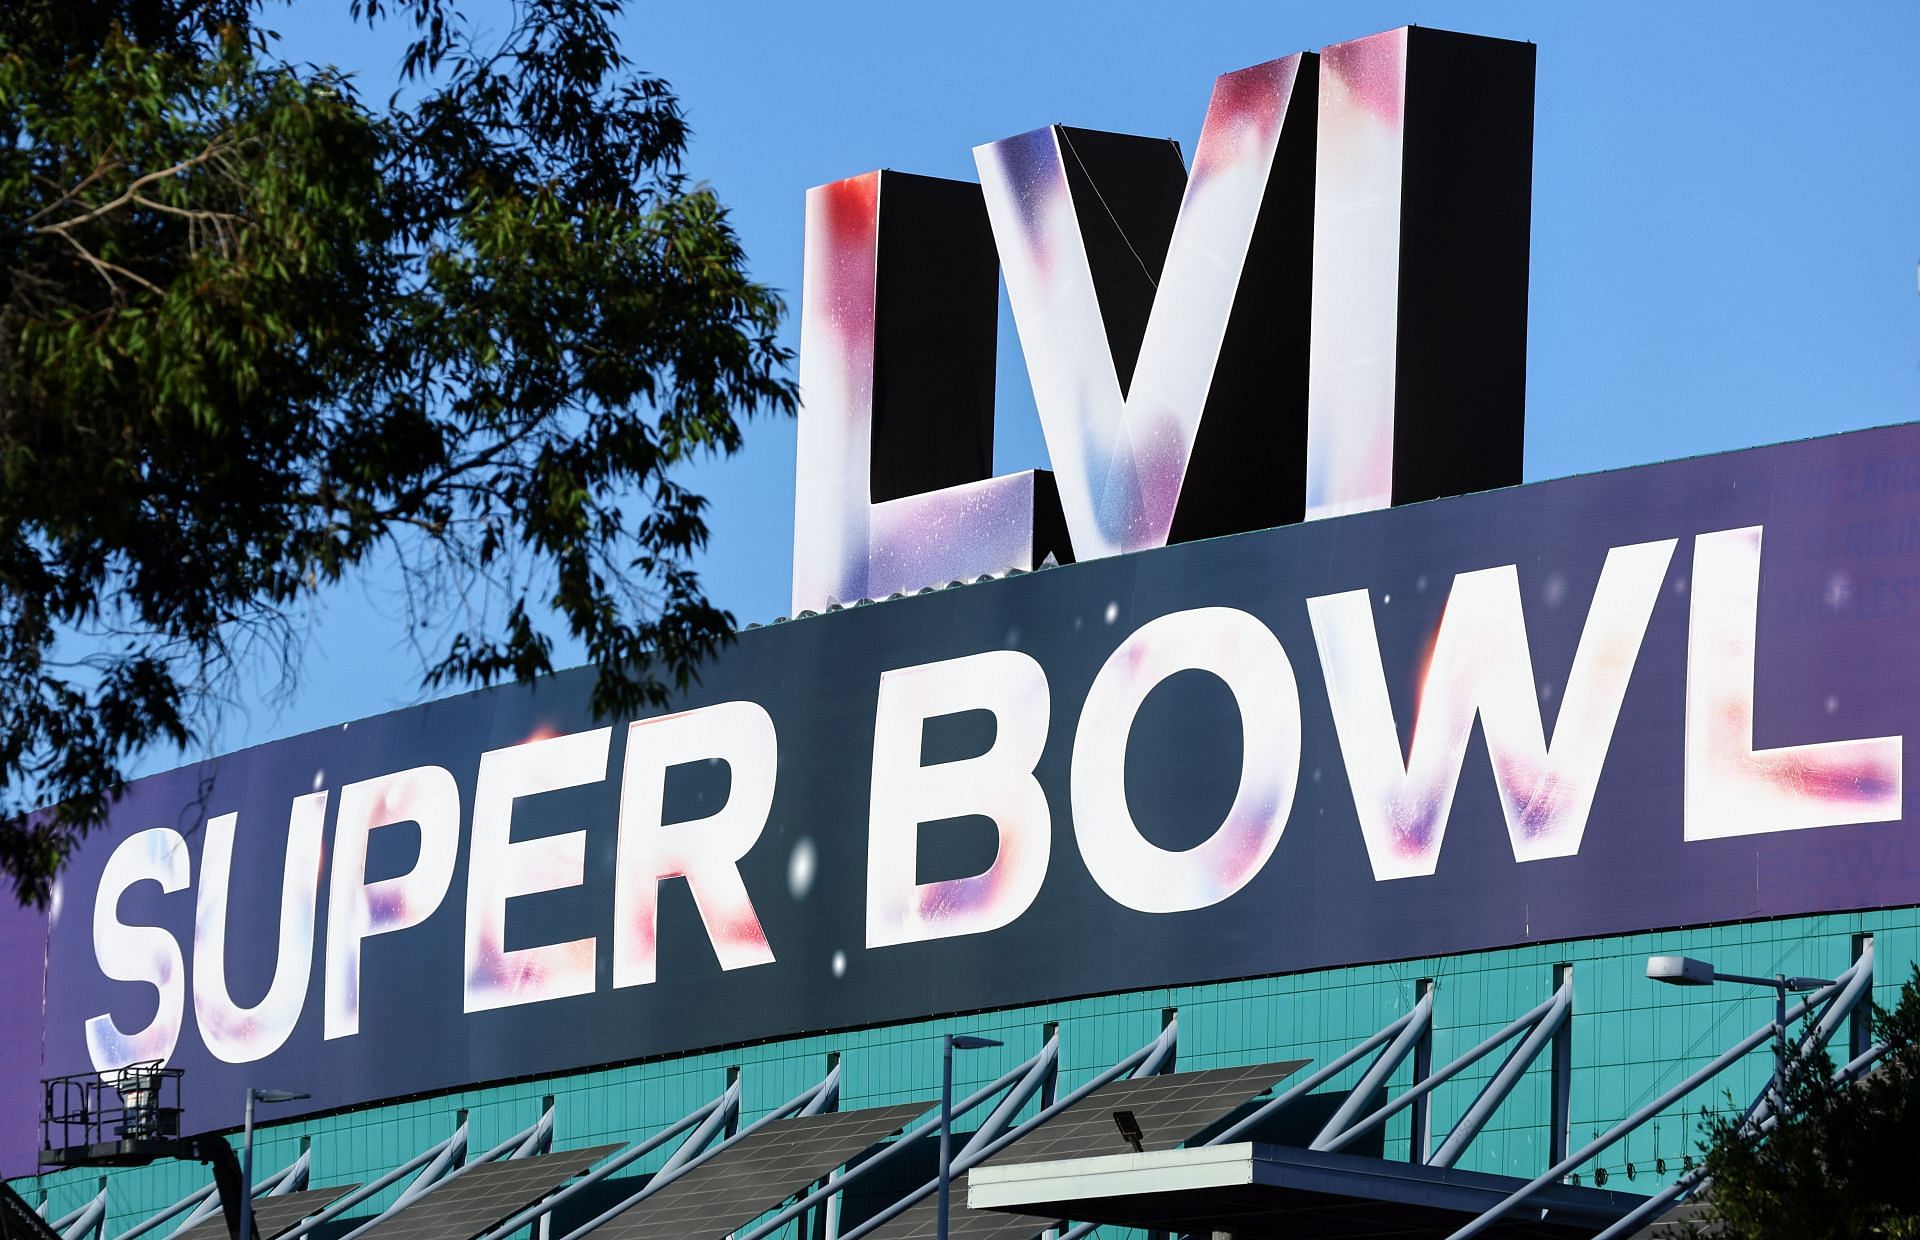 Pepsi is no longer sponsoring the Super Bowl halftime show